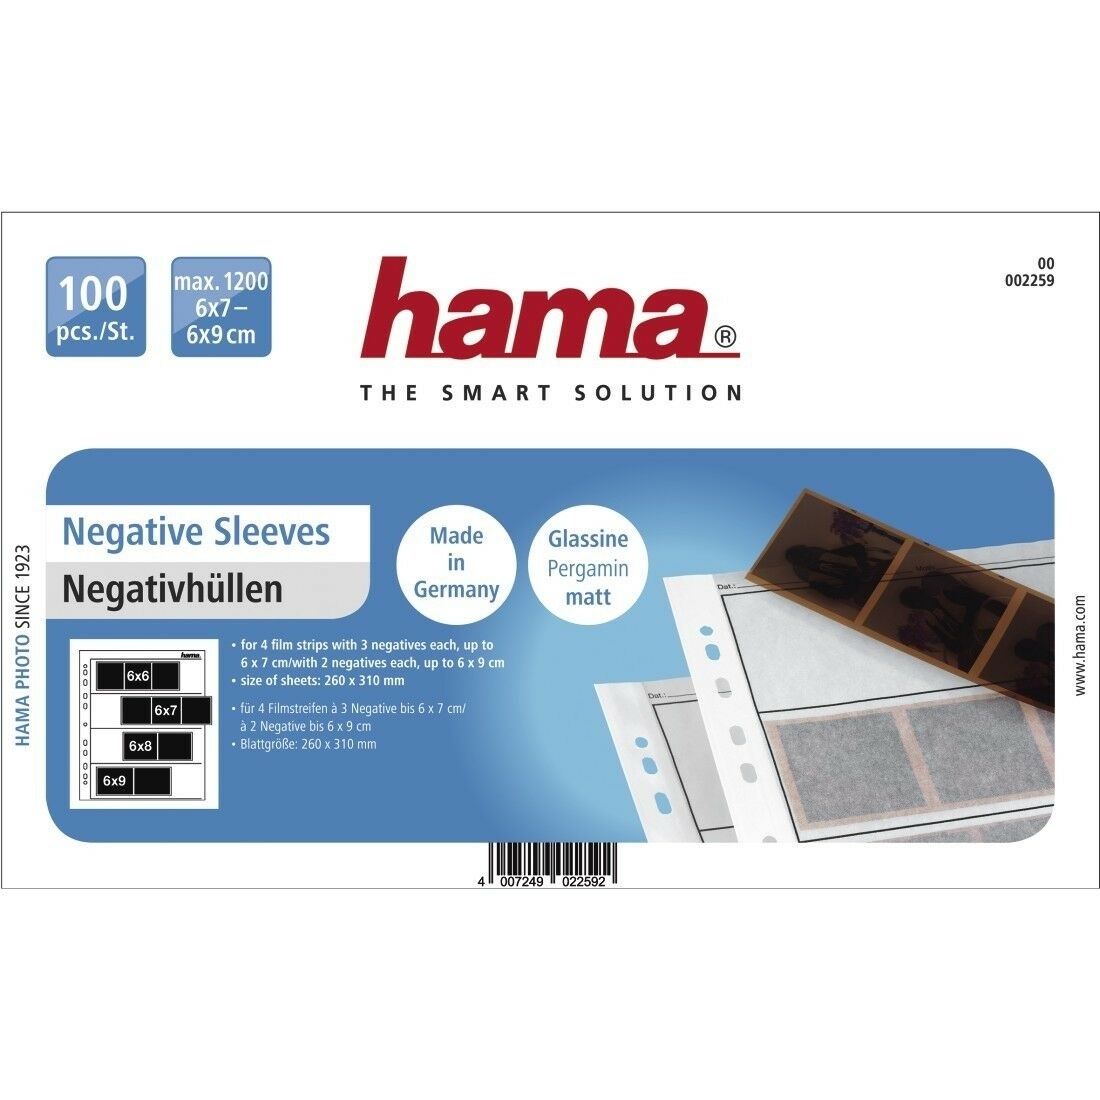 Hama 120 Negative Strip Sleeves 100 Storage Ring Binder Pages - translucent